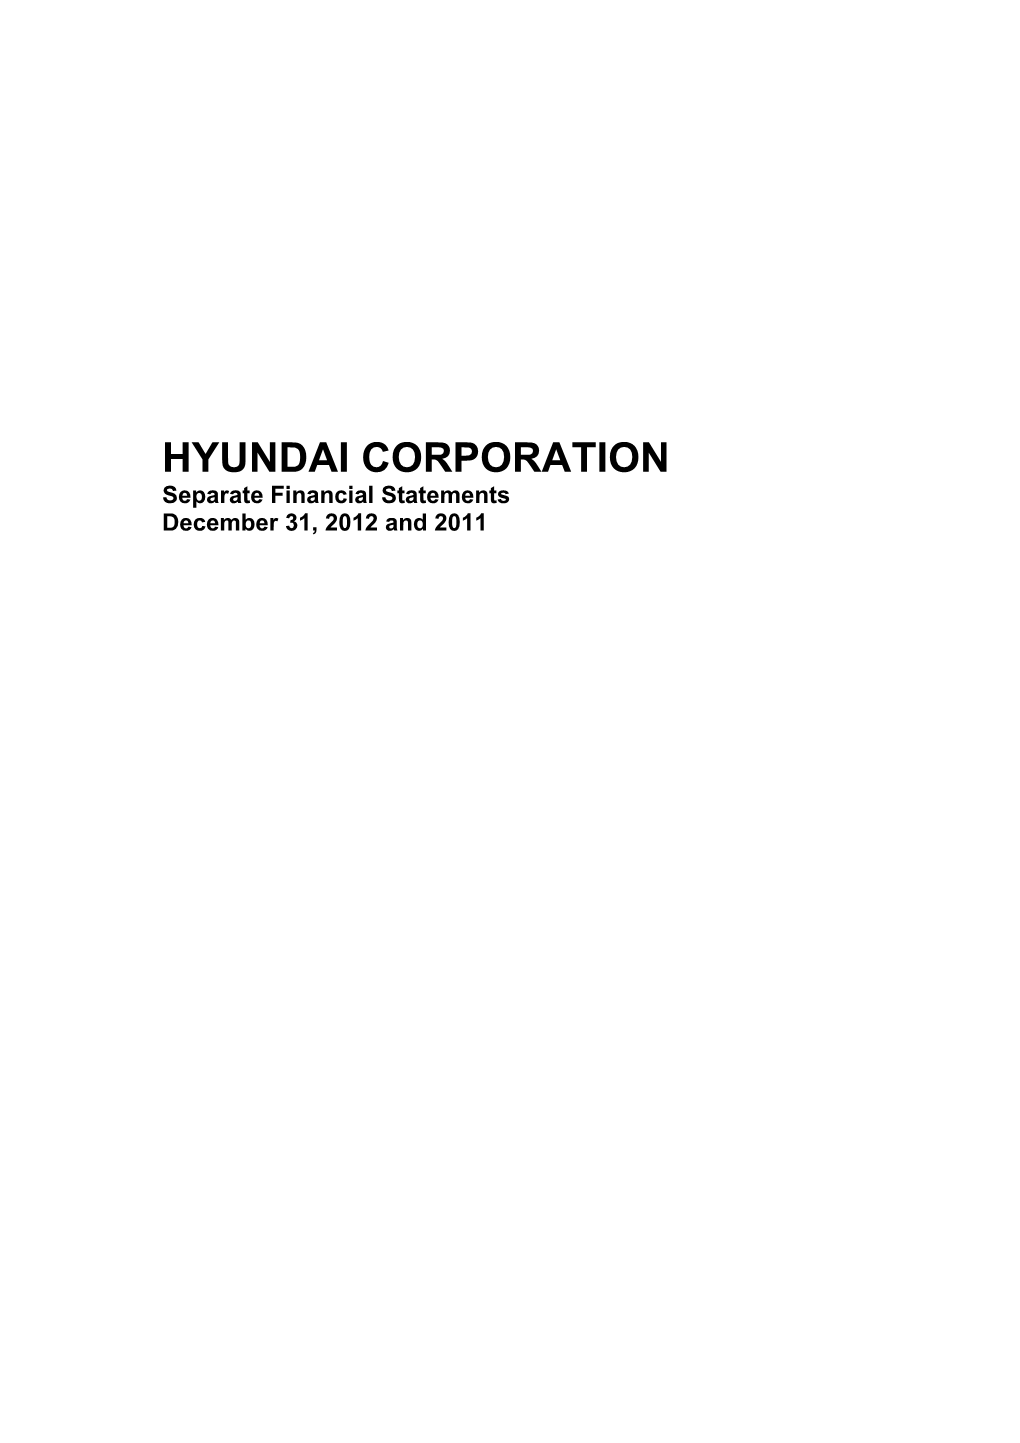 HYUNDAI CORPORATION Separate Financial Statements December 31, 2012 and 2011 HYUNDAI CORPORATION Index December 31, 2012 and 2011